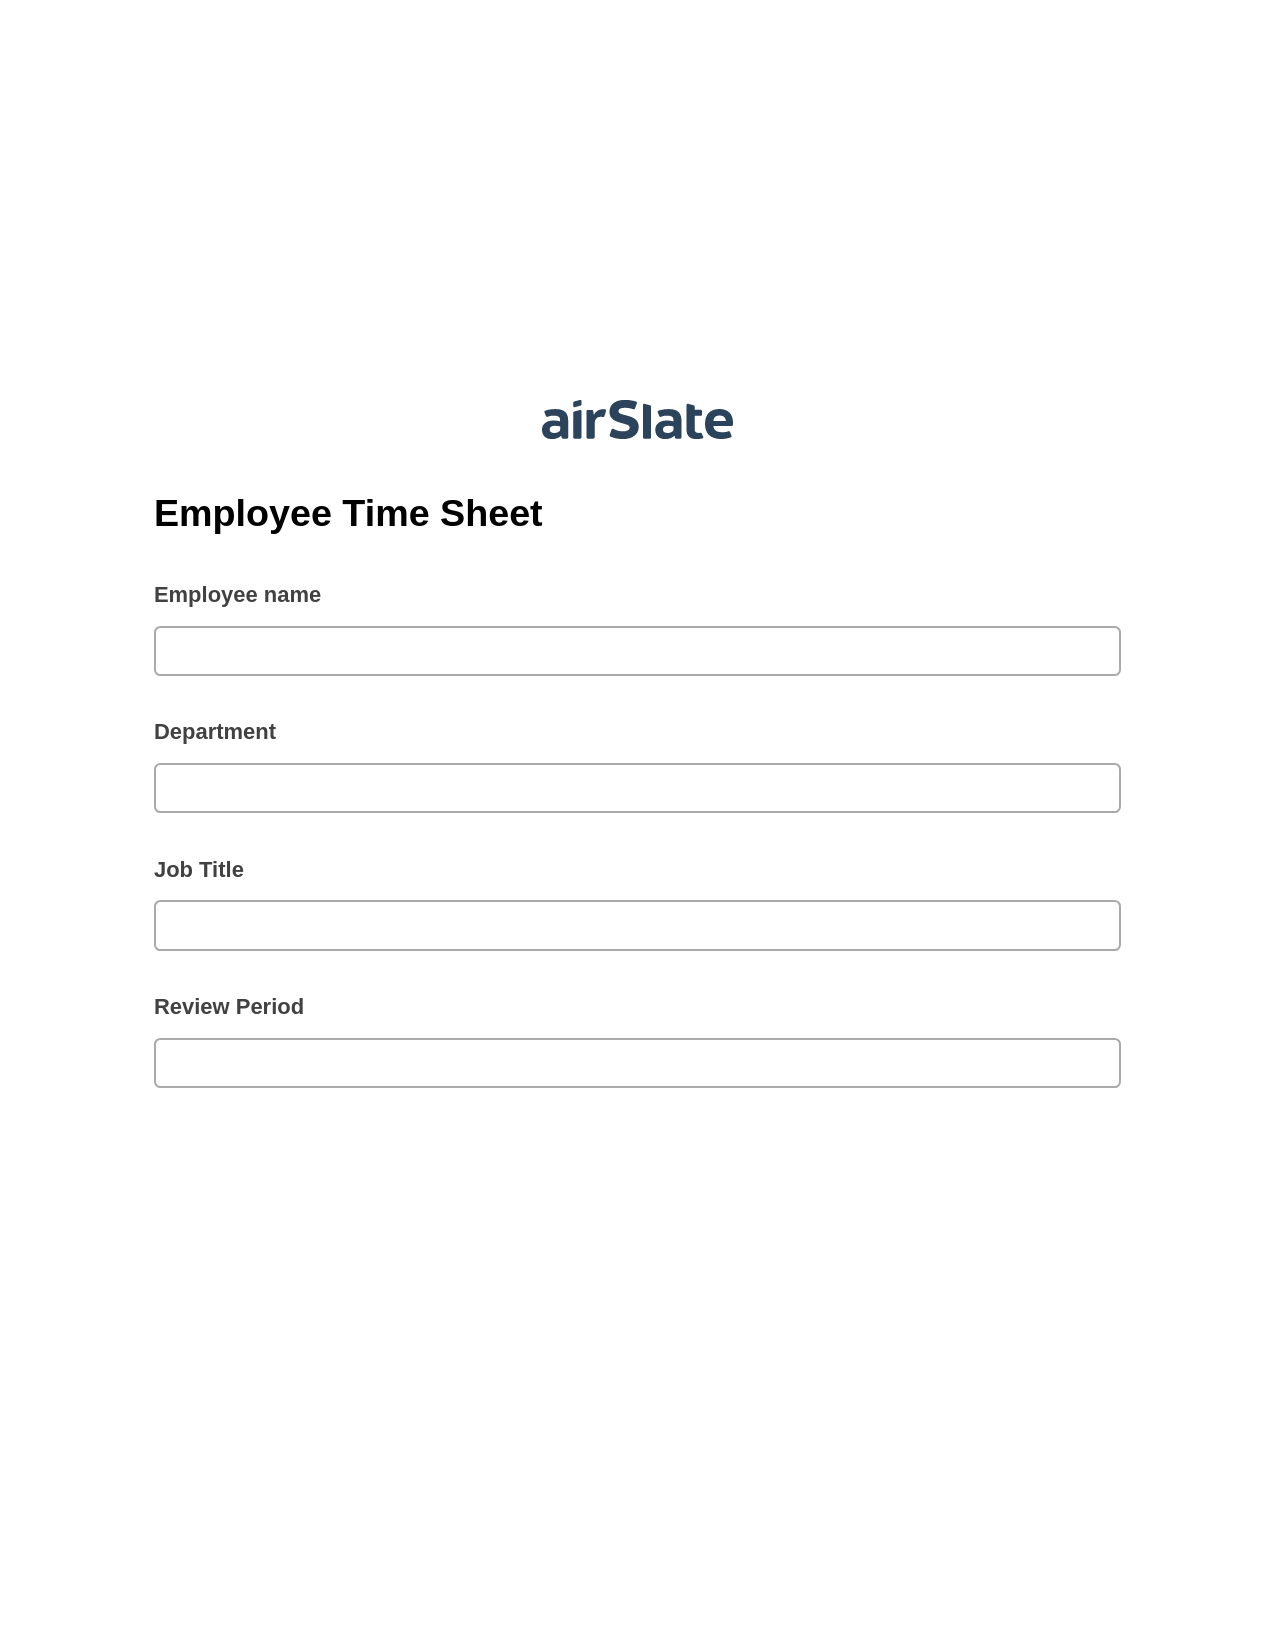 Multirole Employee Time Sheet Pre-fill from Salesforce Records Bot, Google Sheet Two-Way Binding Bot, Webhook Postfinish Bot